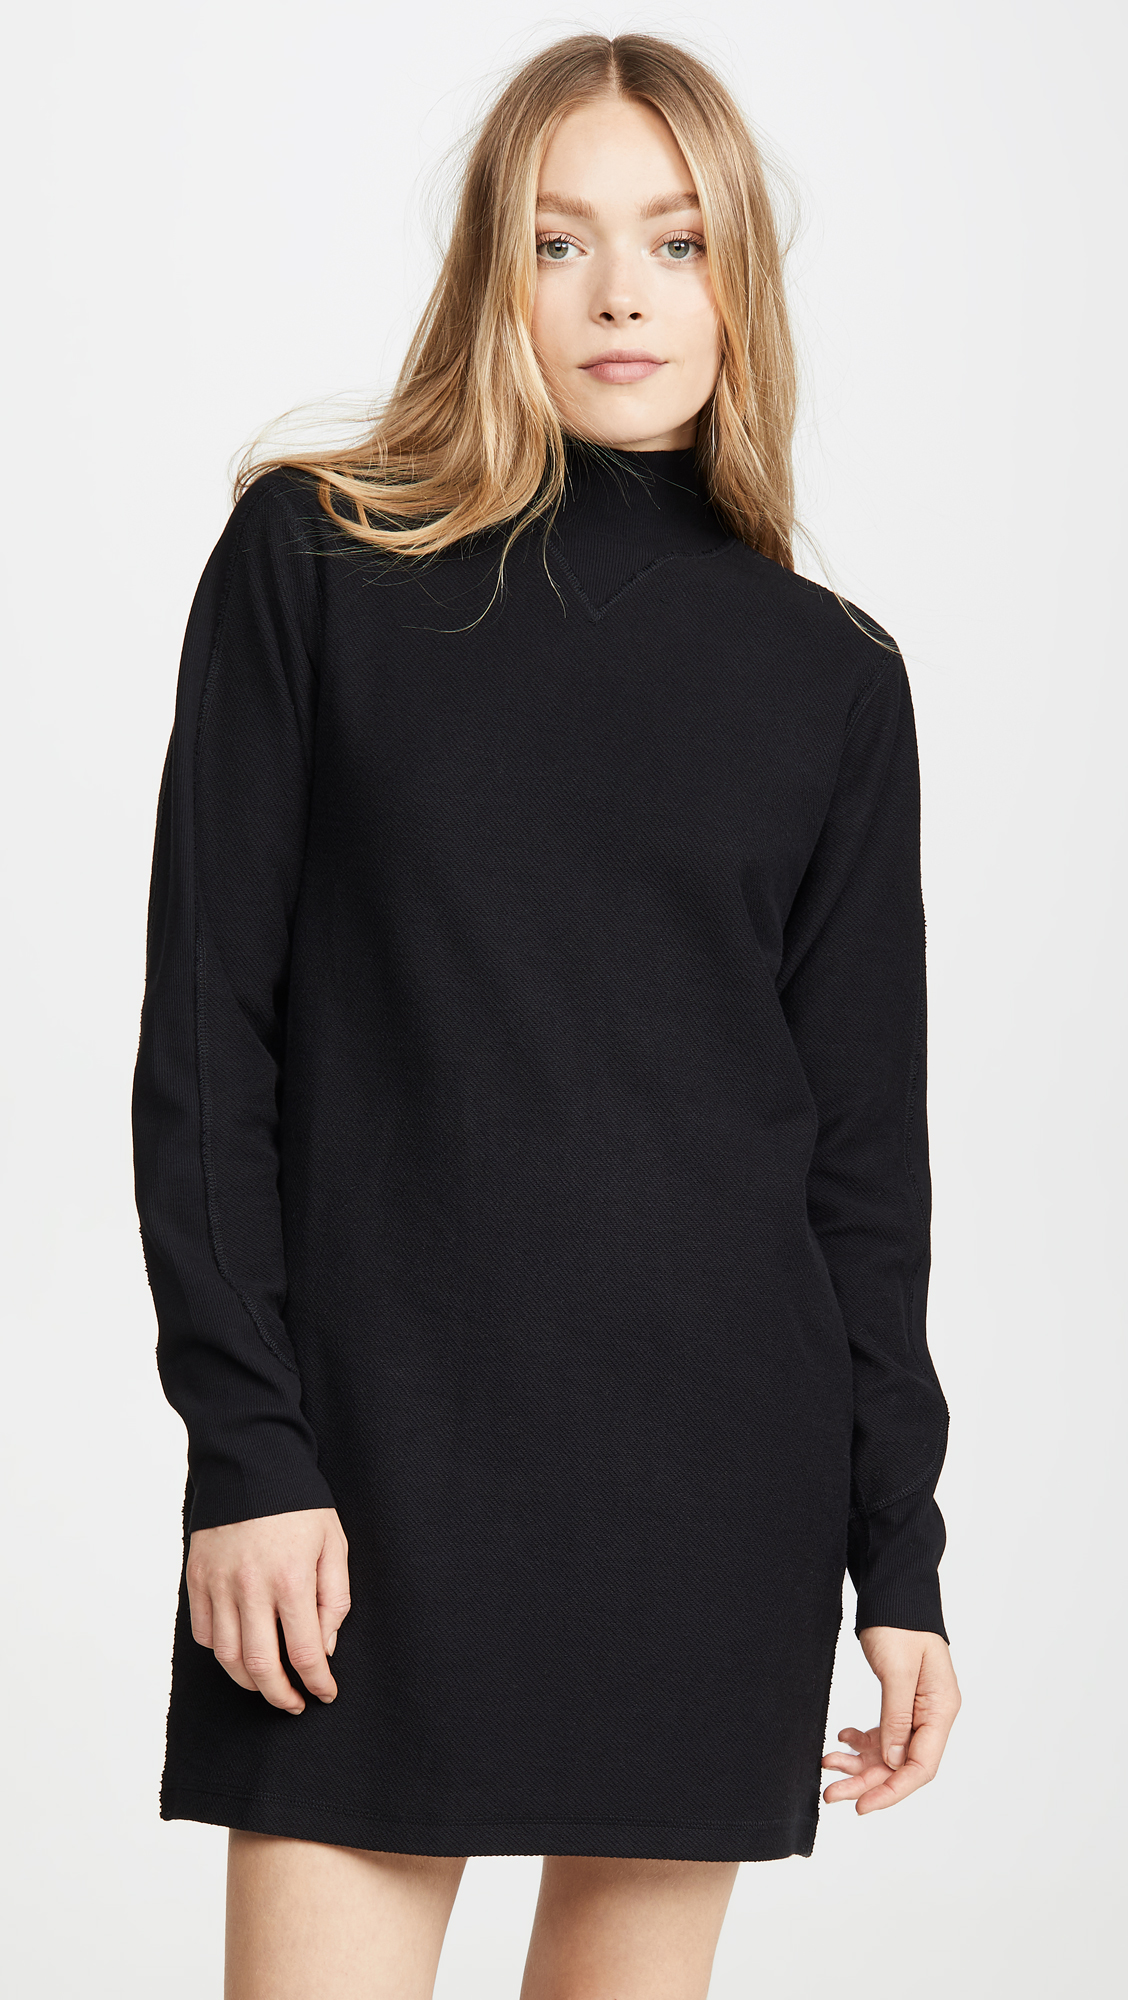 Black Turtleneck Sweater Dress